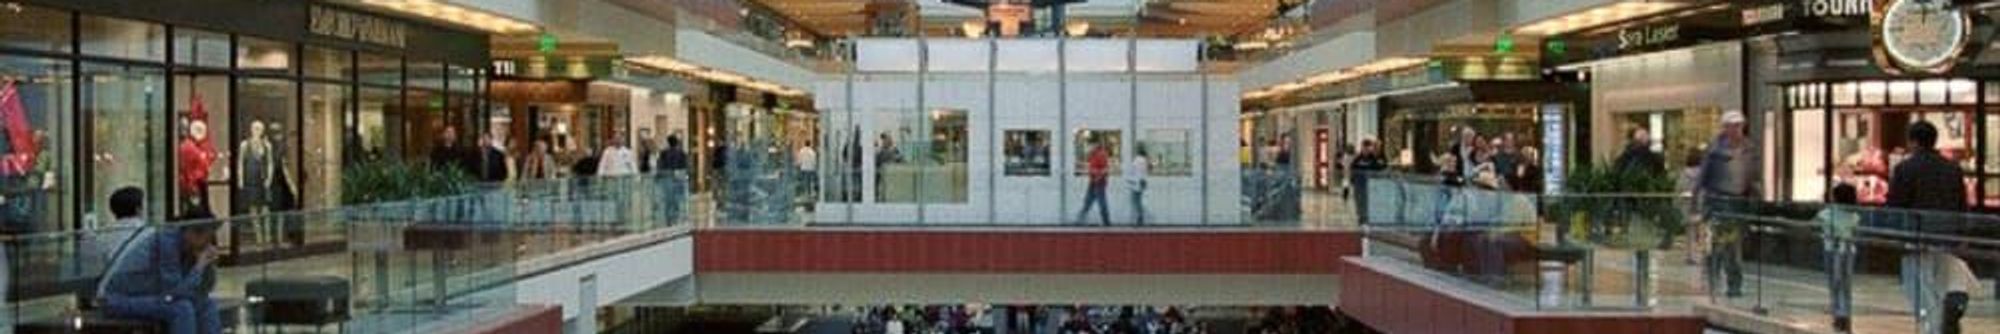 Houston Galleria's ice rink unveils $1 million renovations